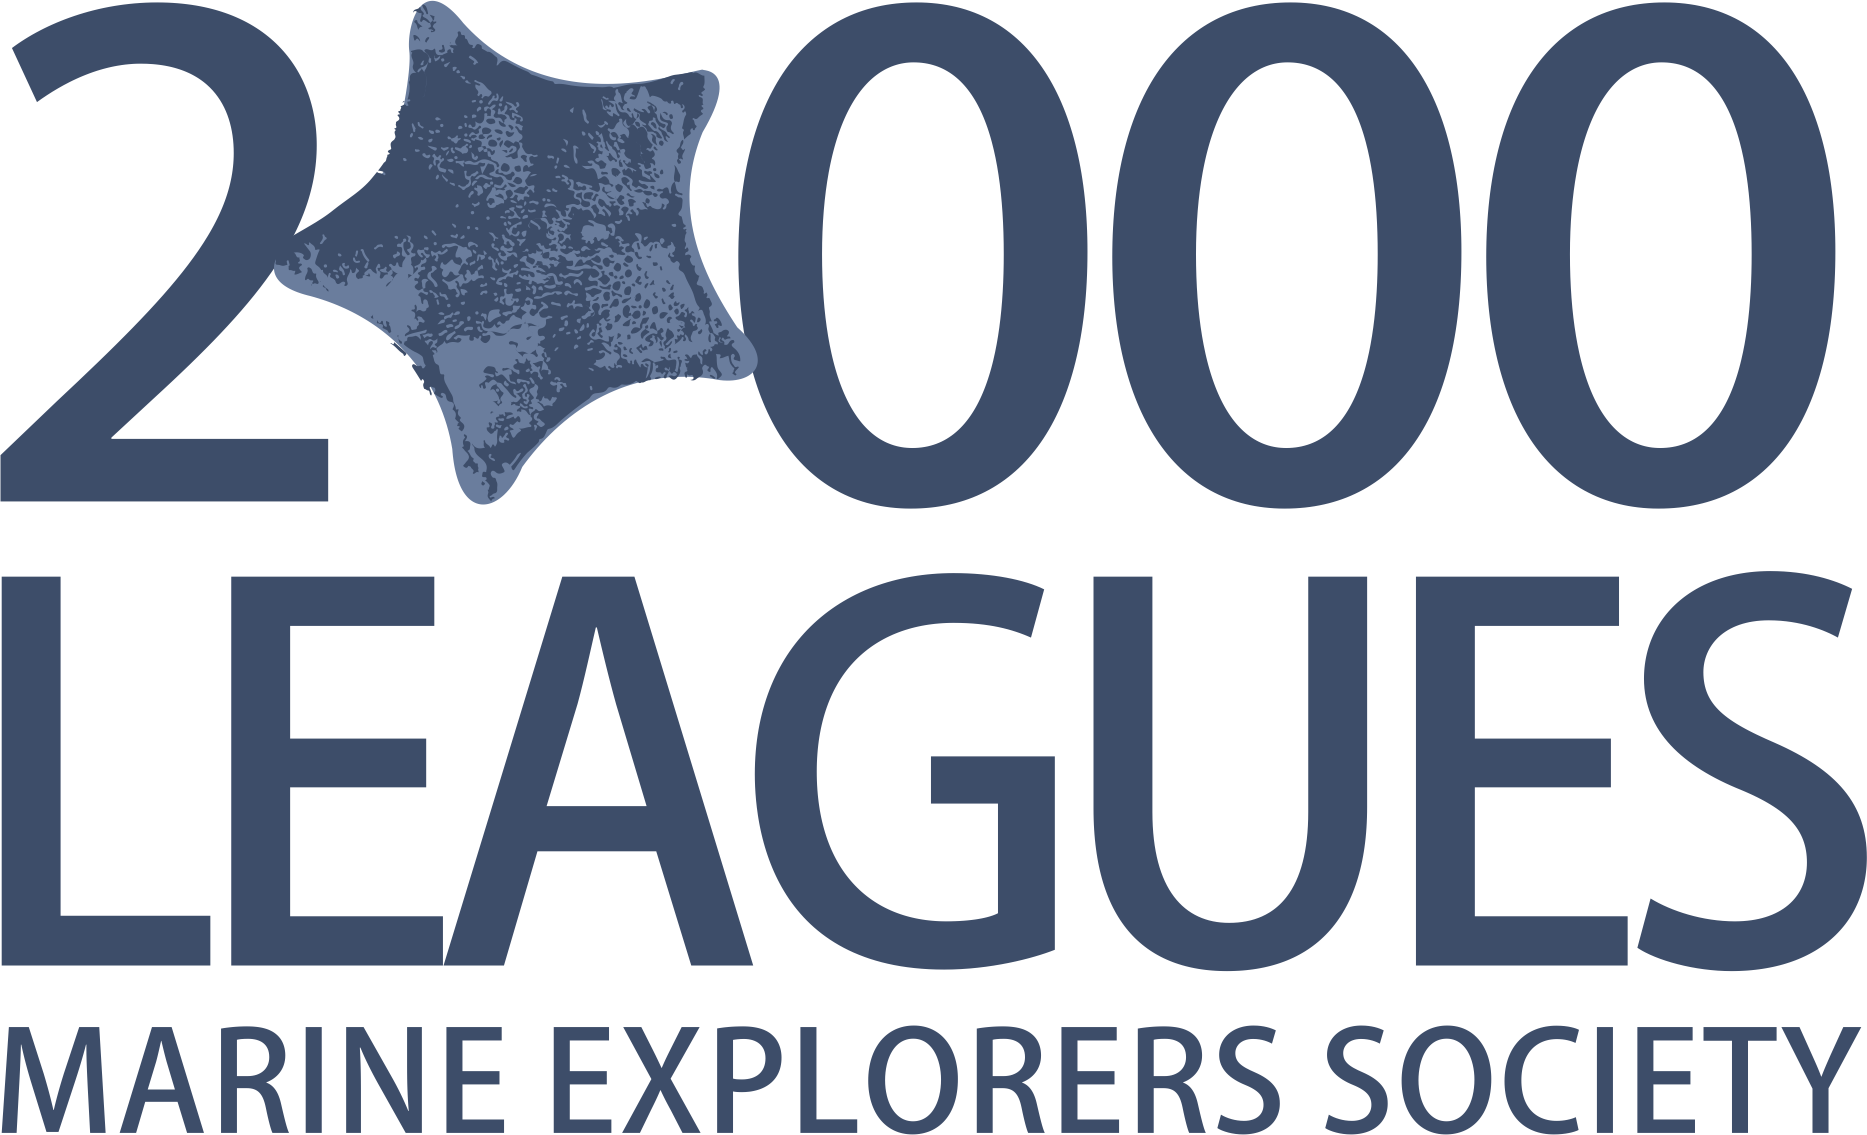 2000 leagues marine Explorers society logo